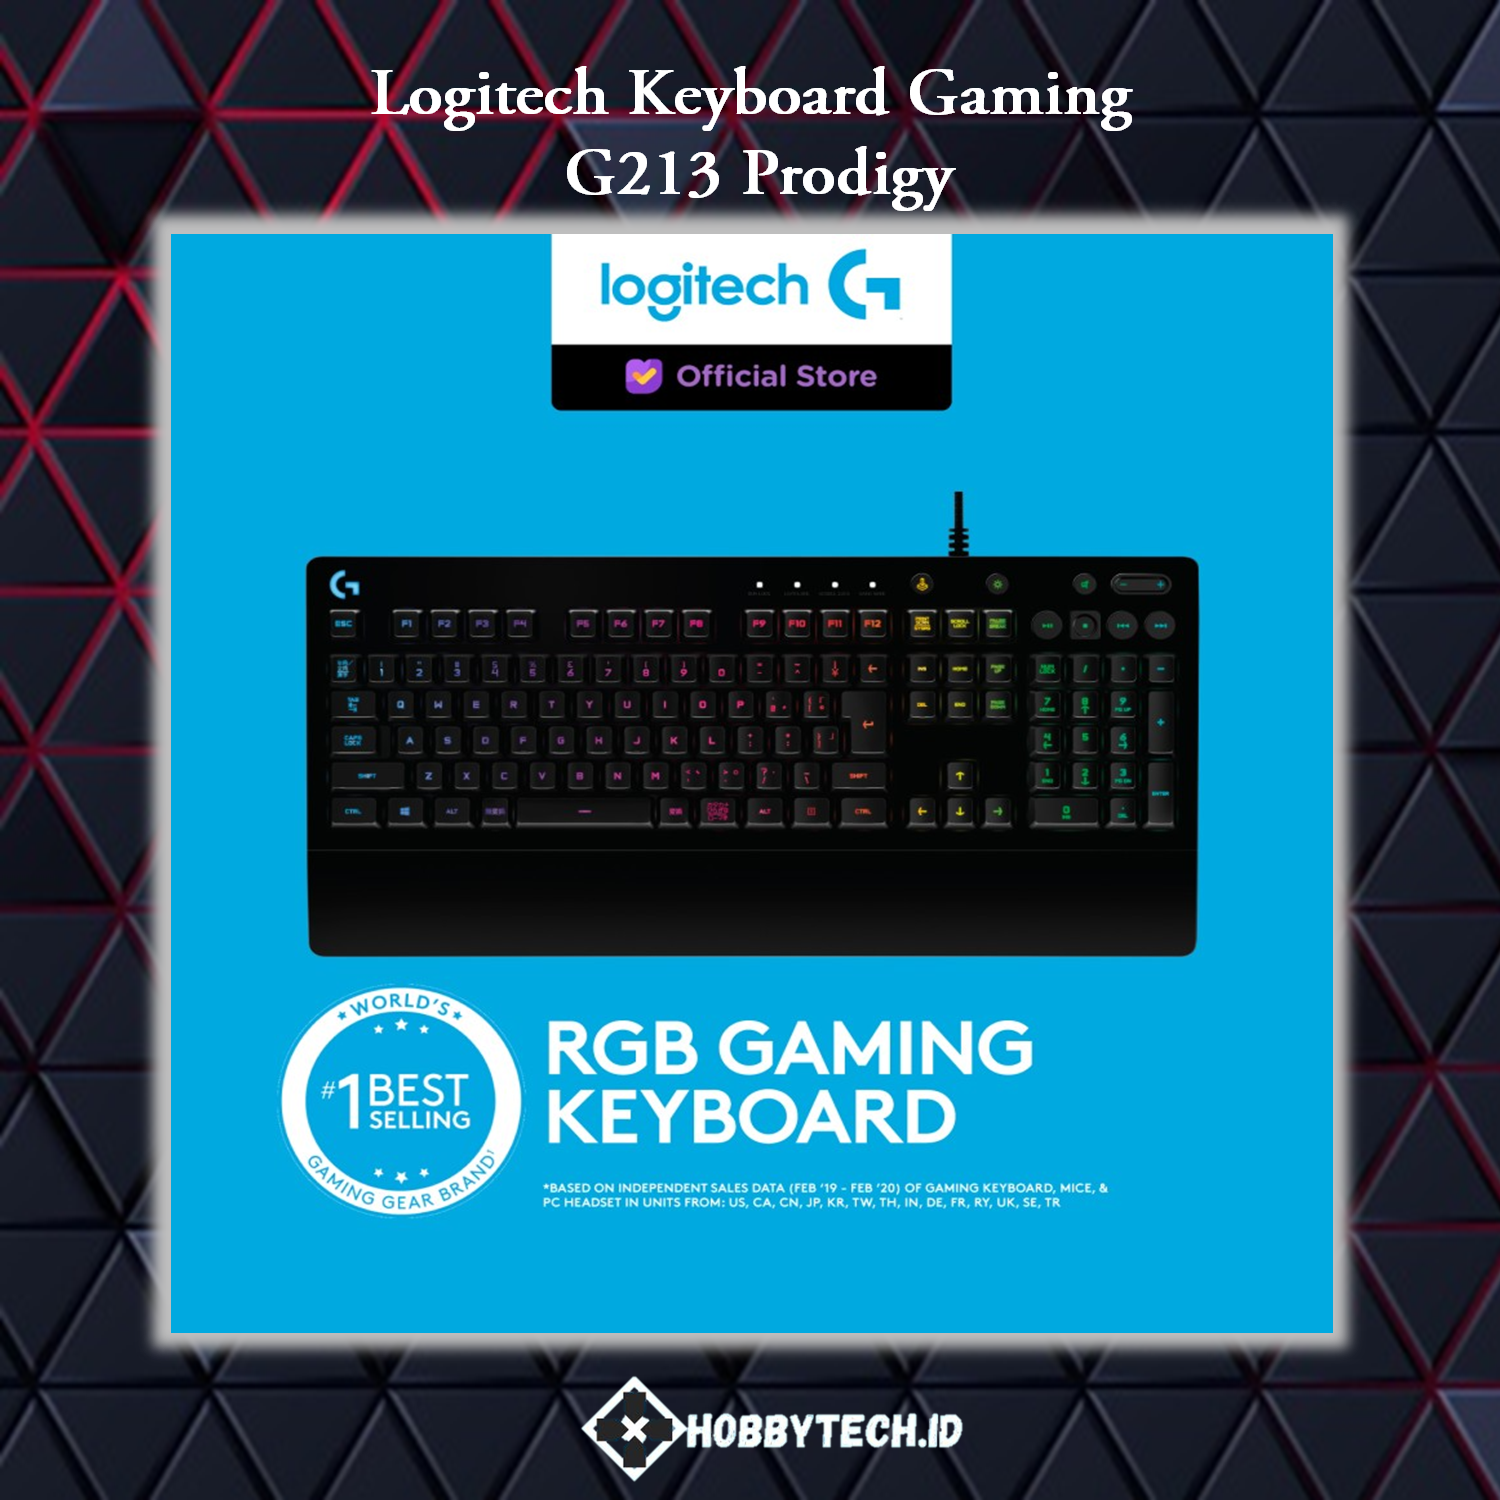 Logitech-G G213 Prodigy RGB Gaming Keyboard